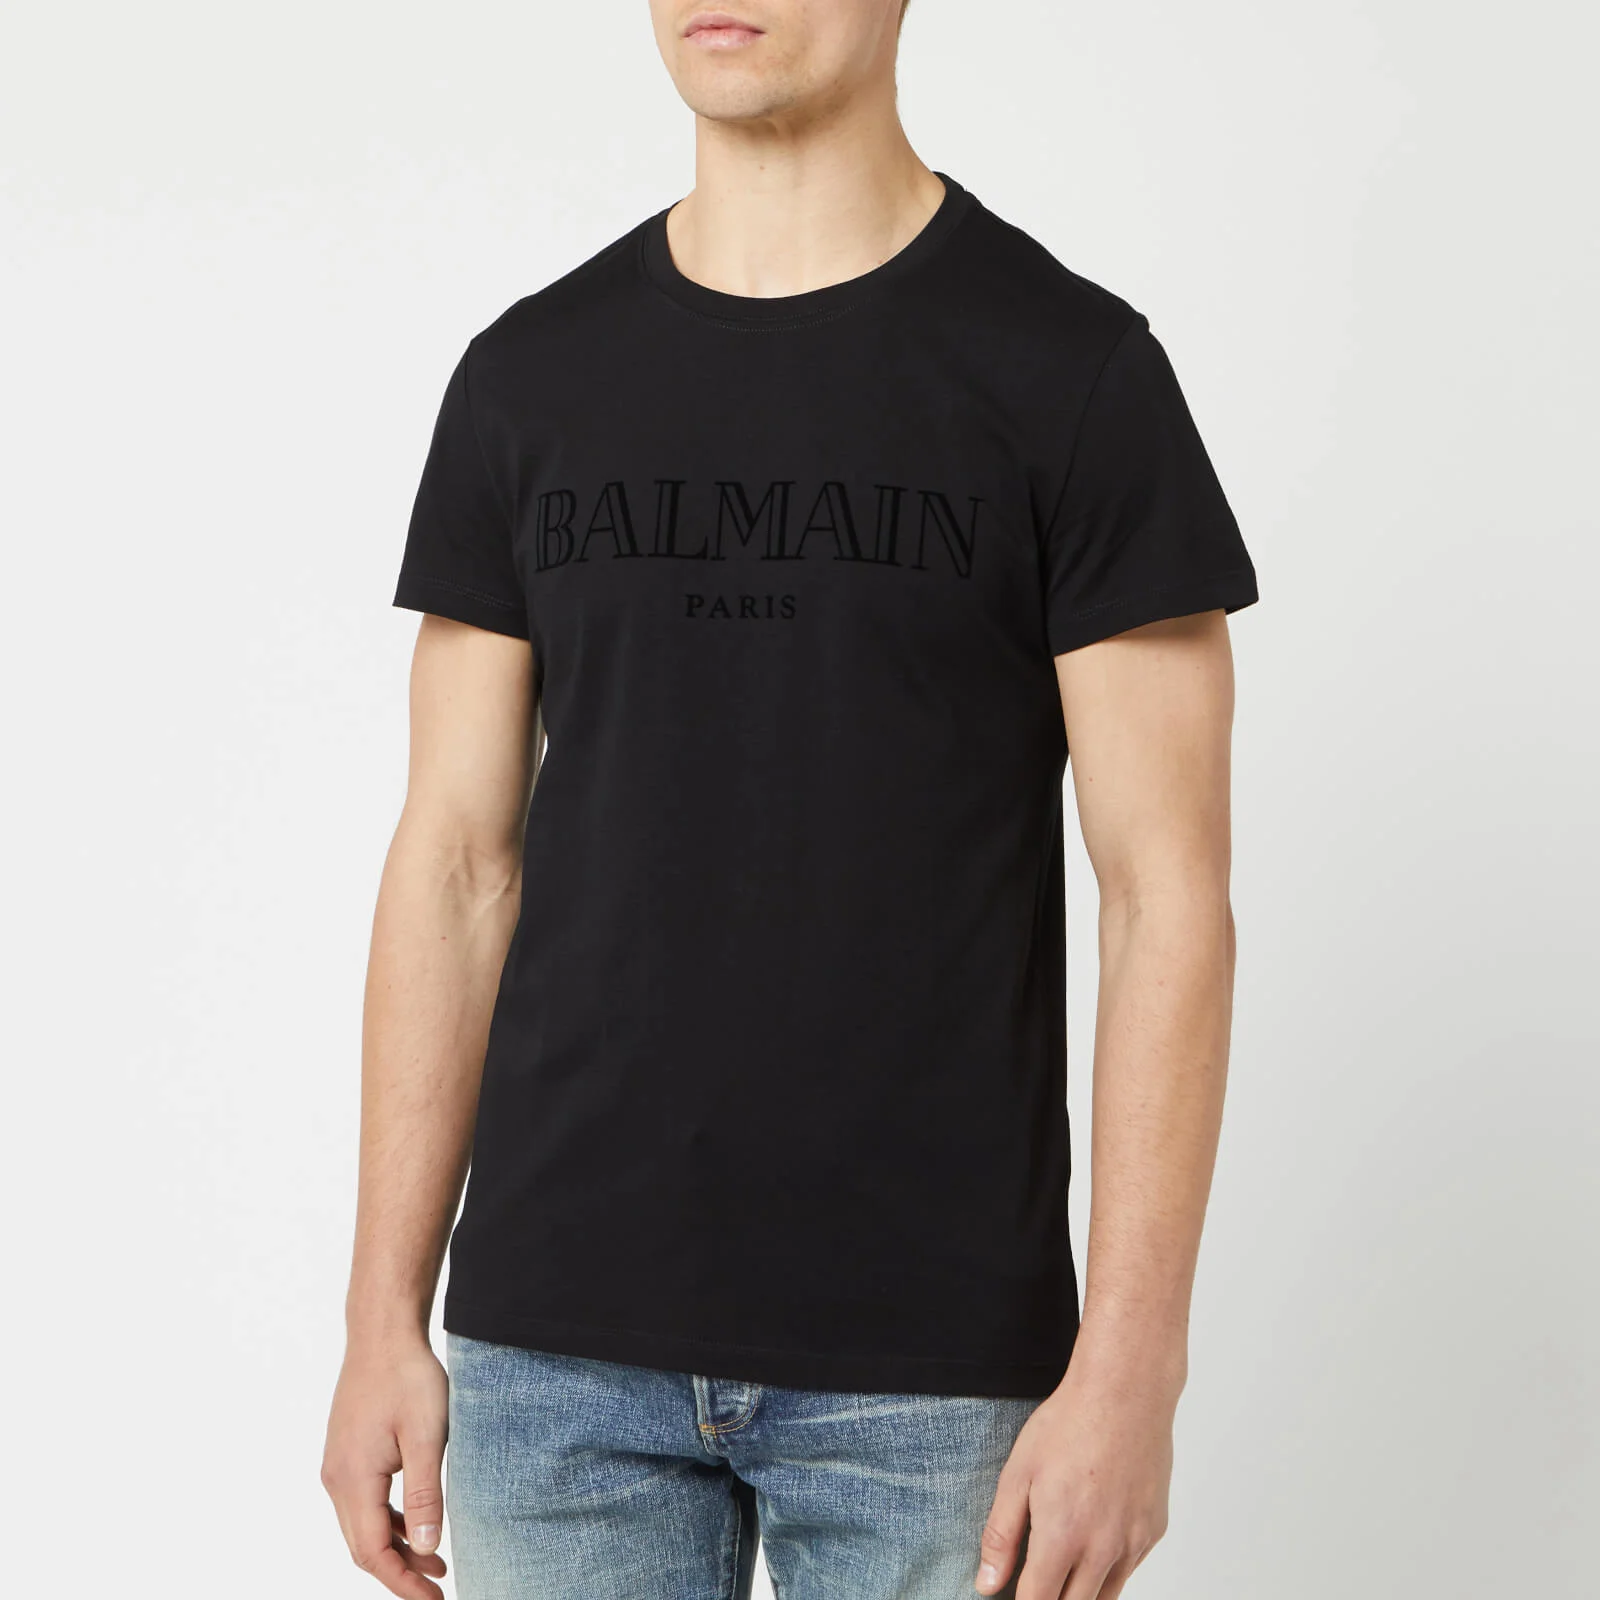 Balmain Men's Paris T-Shirt - Noir Image 1